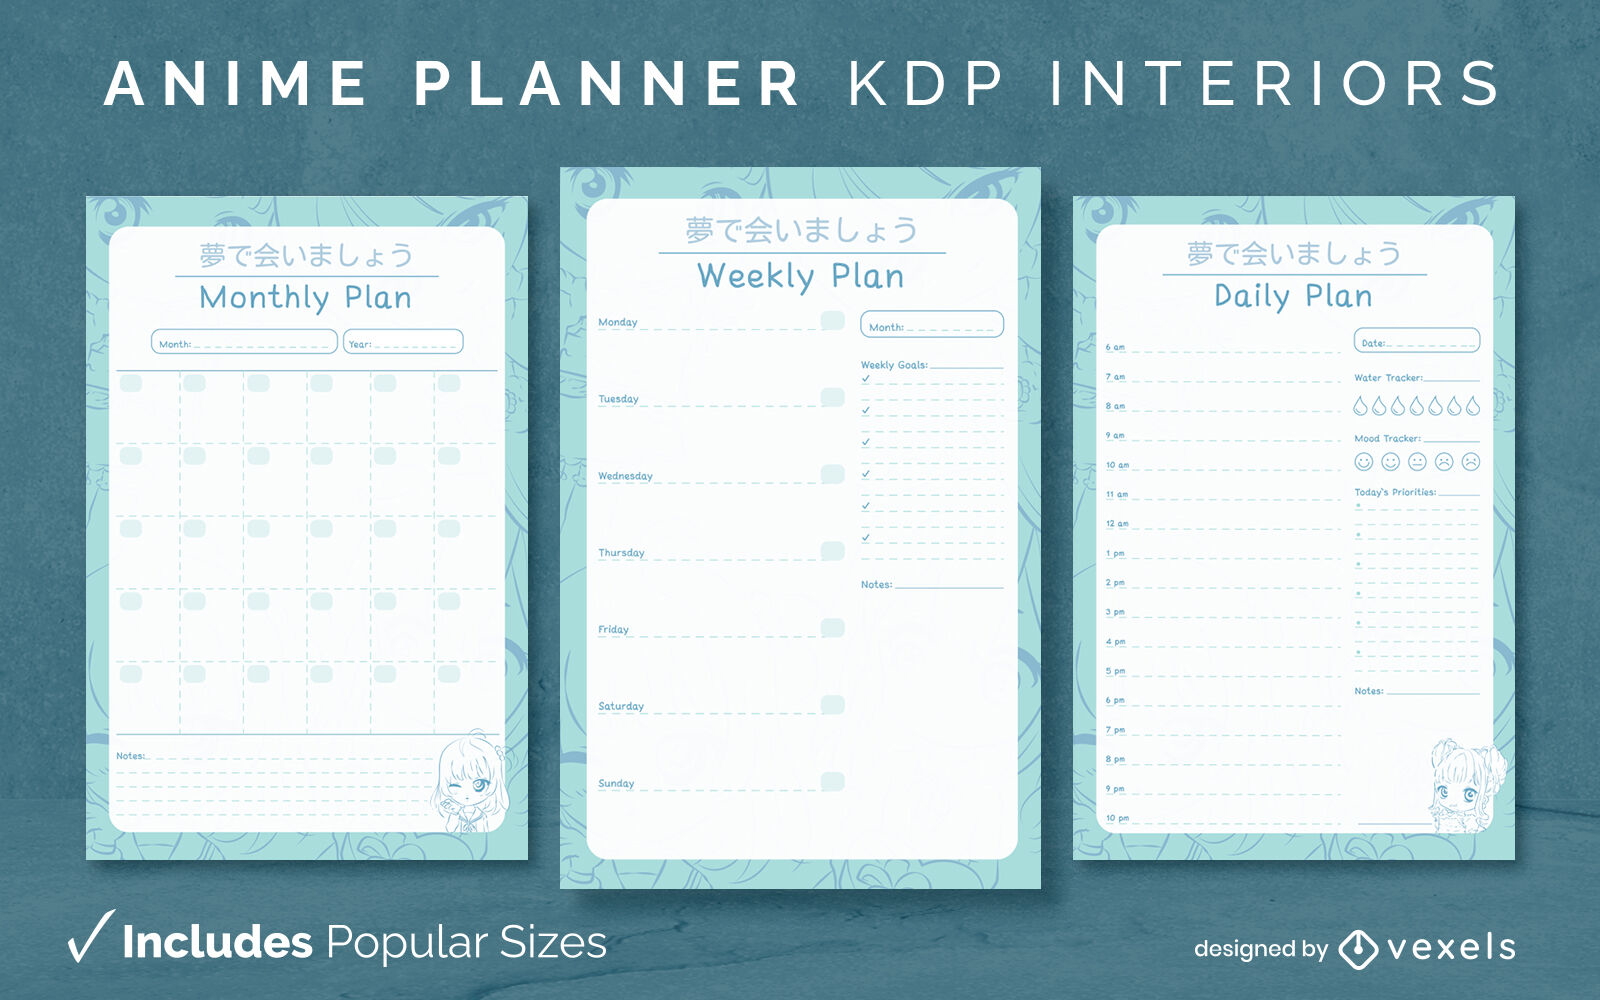 Anime planner journal template KDP interior design